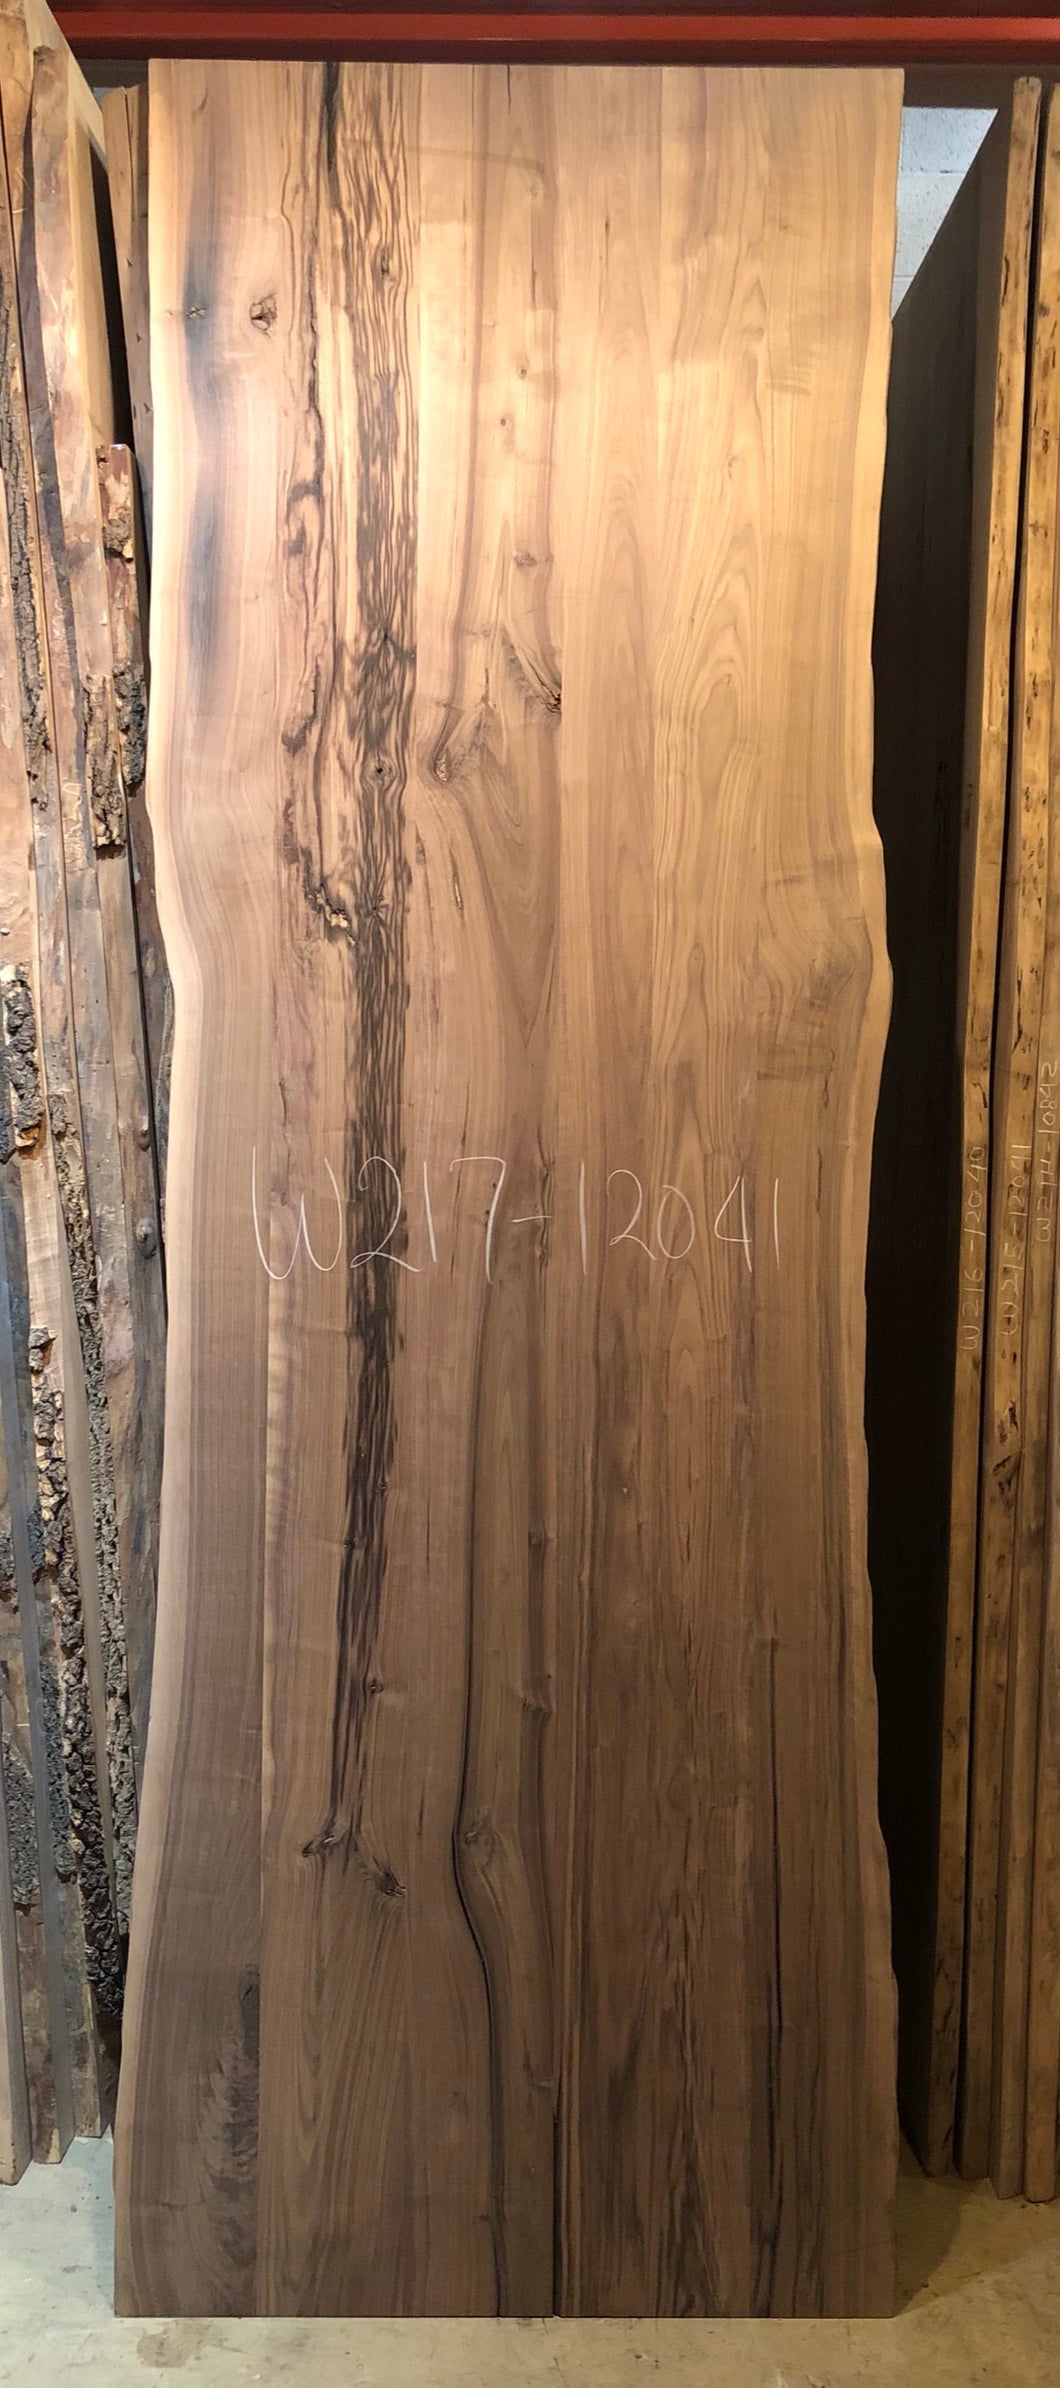 W217-12041 Live edge walnut wood 120x41